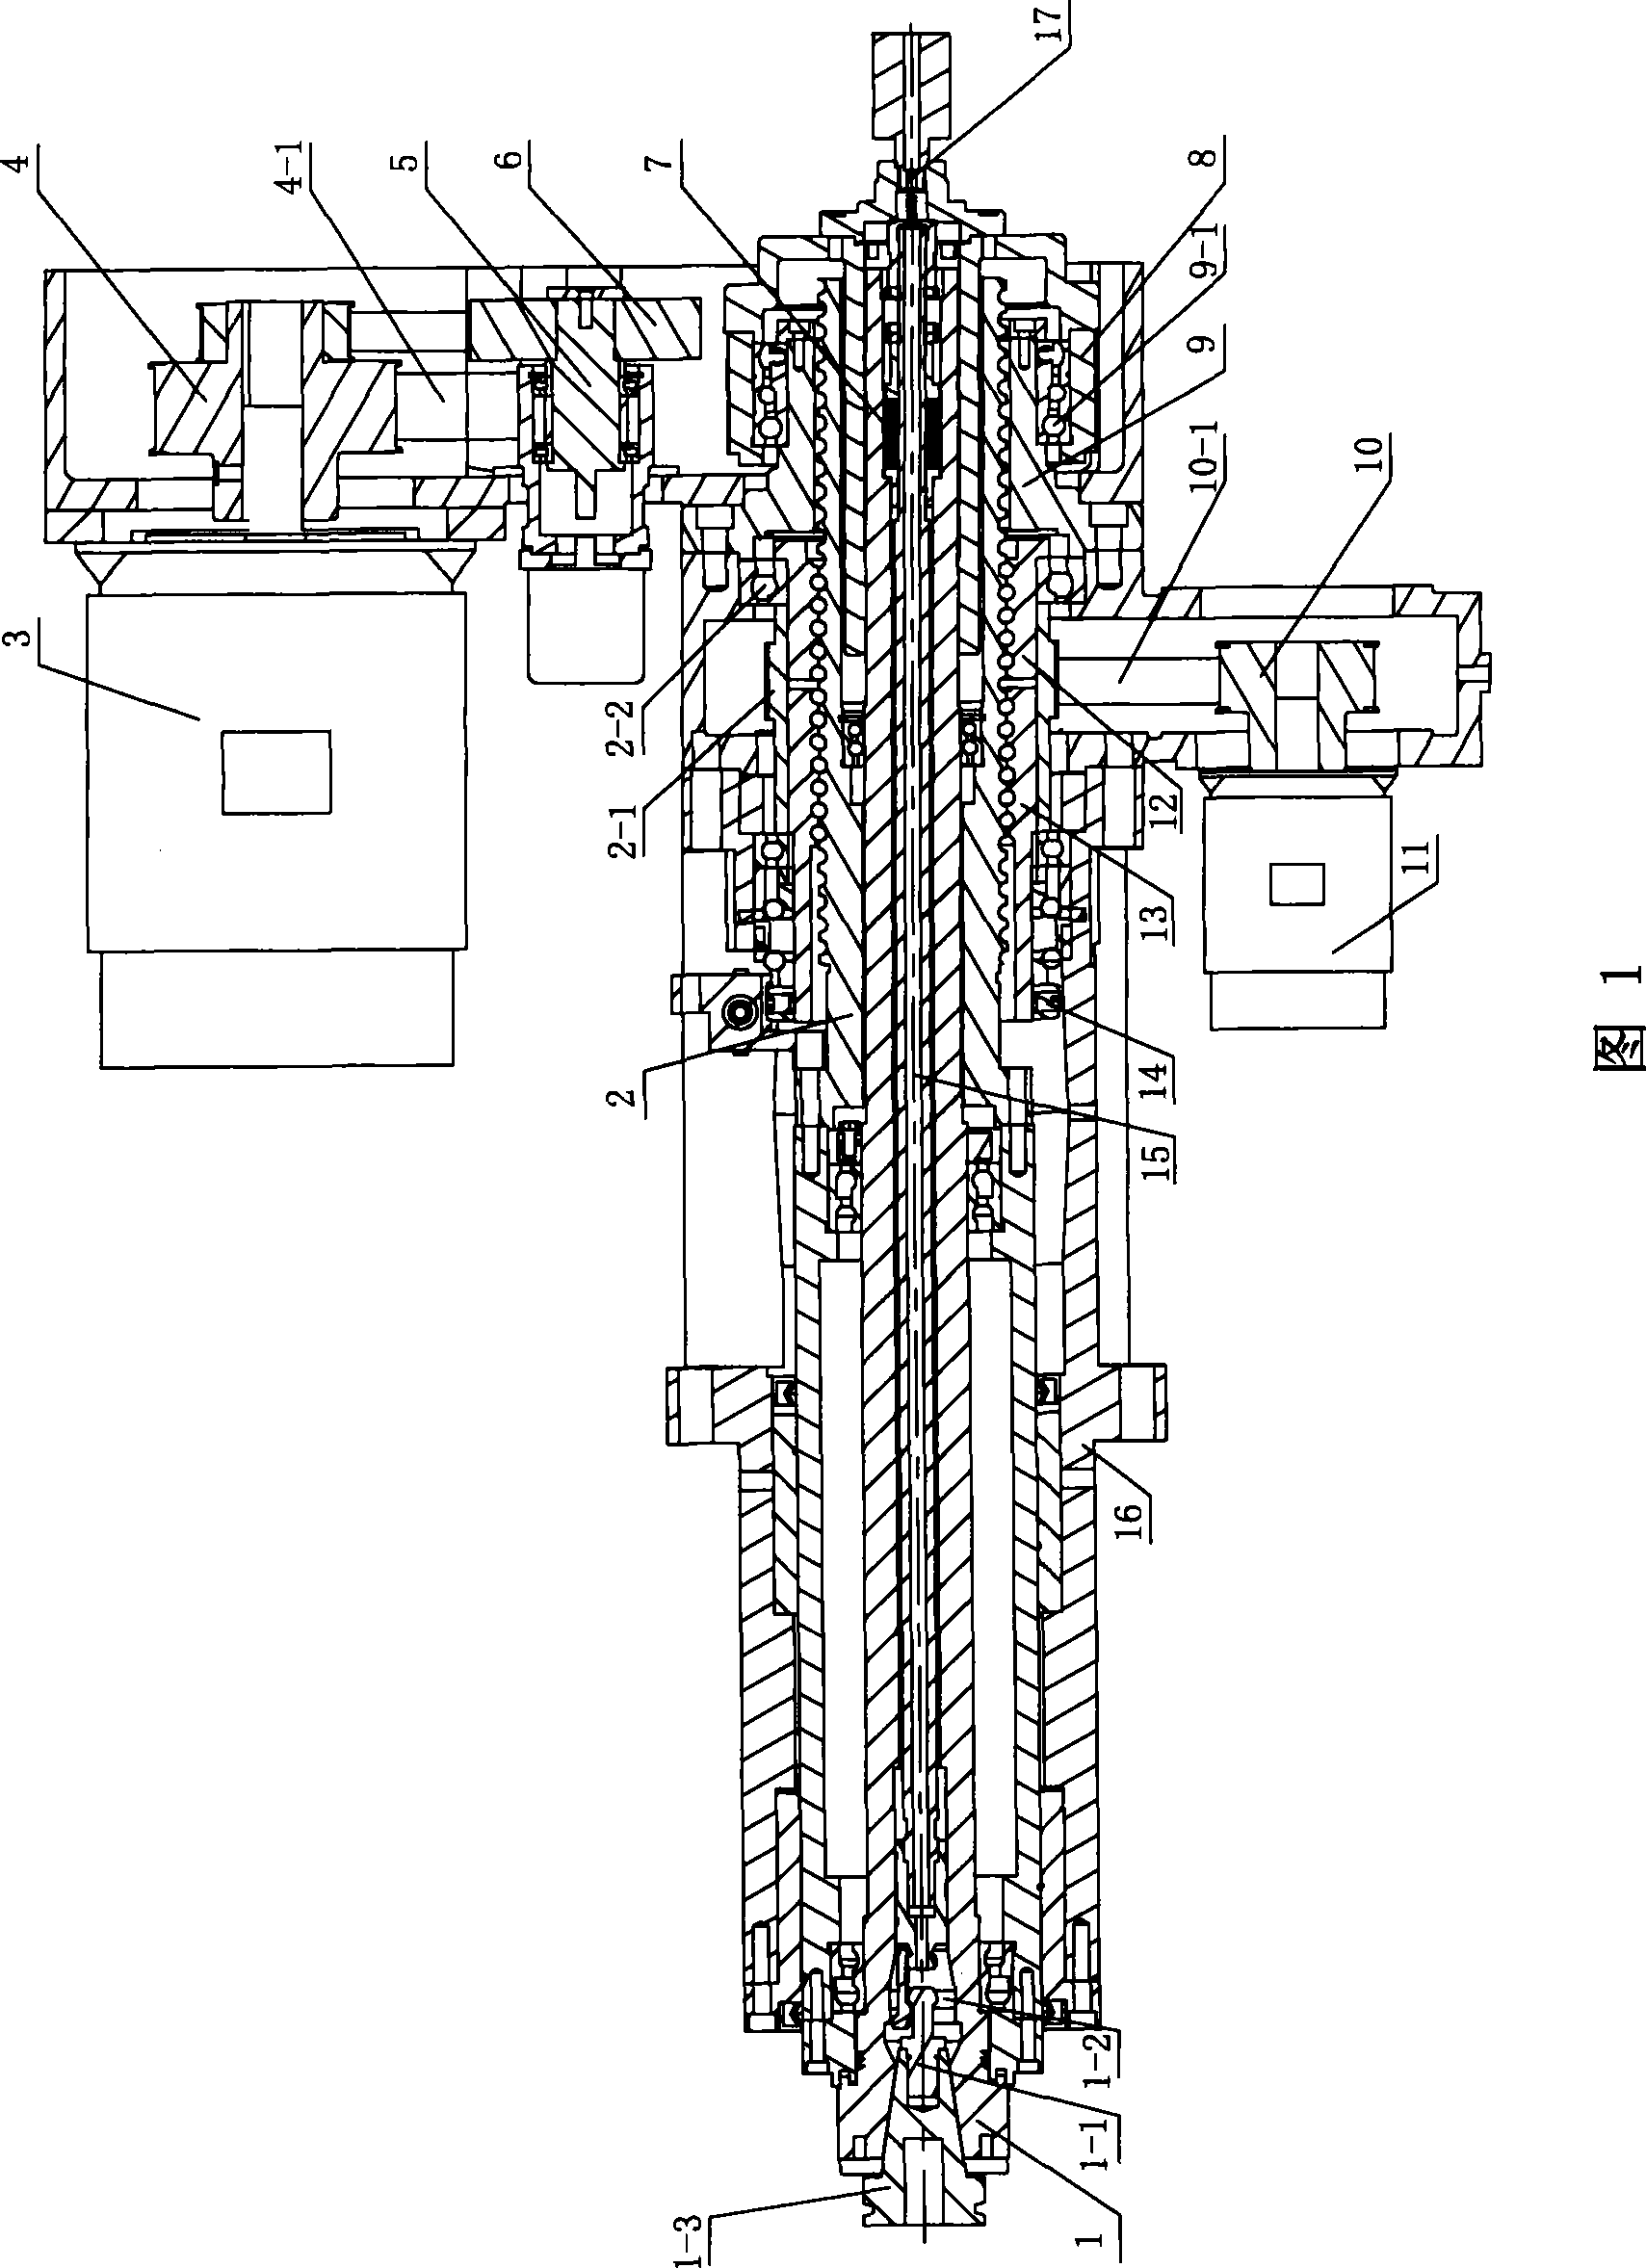 Numerical control main axle unit